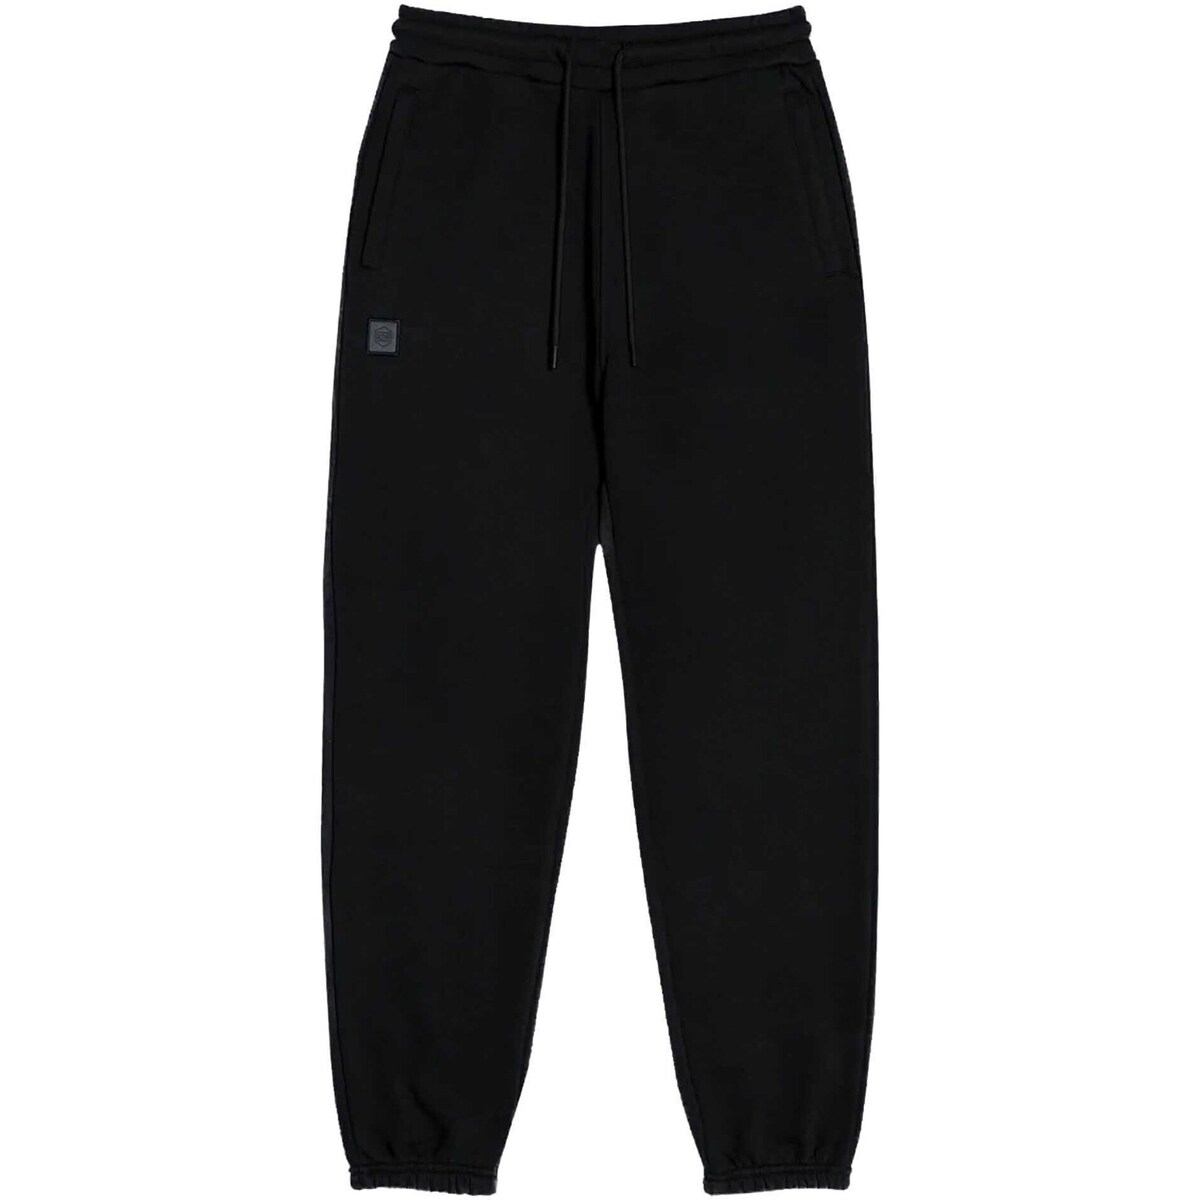 Textiel Heren Broeken / Pantalons Dolly Noire Pantaloni Basic Sweatpants Zwart